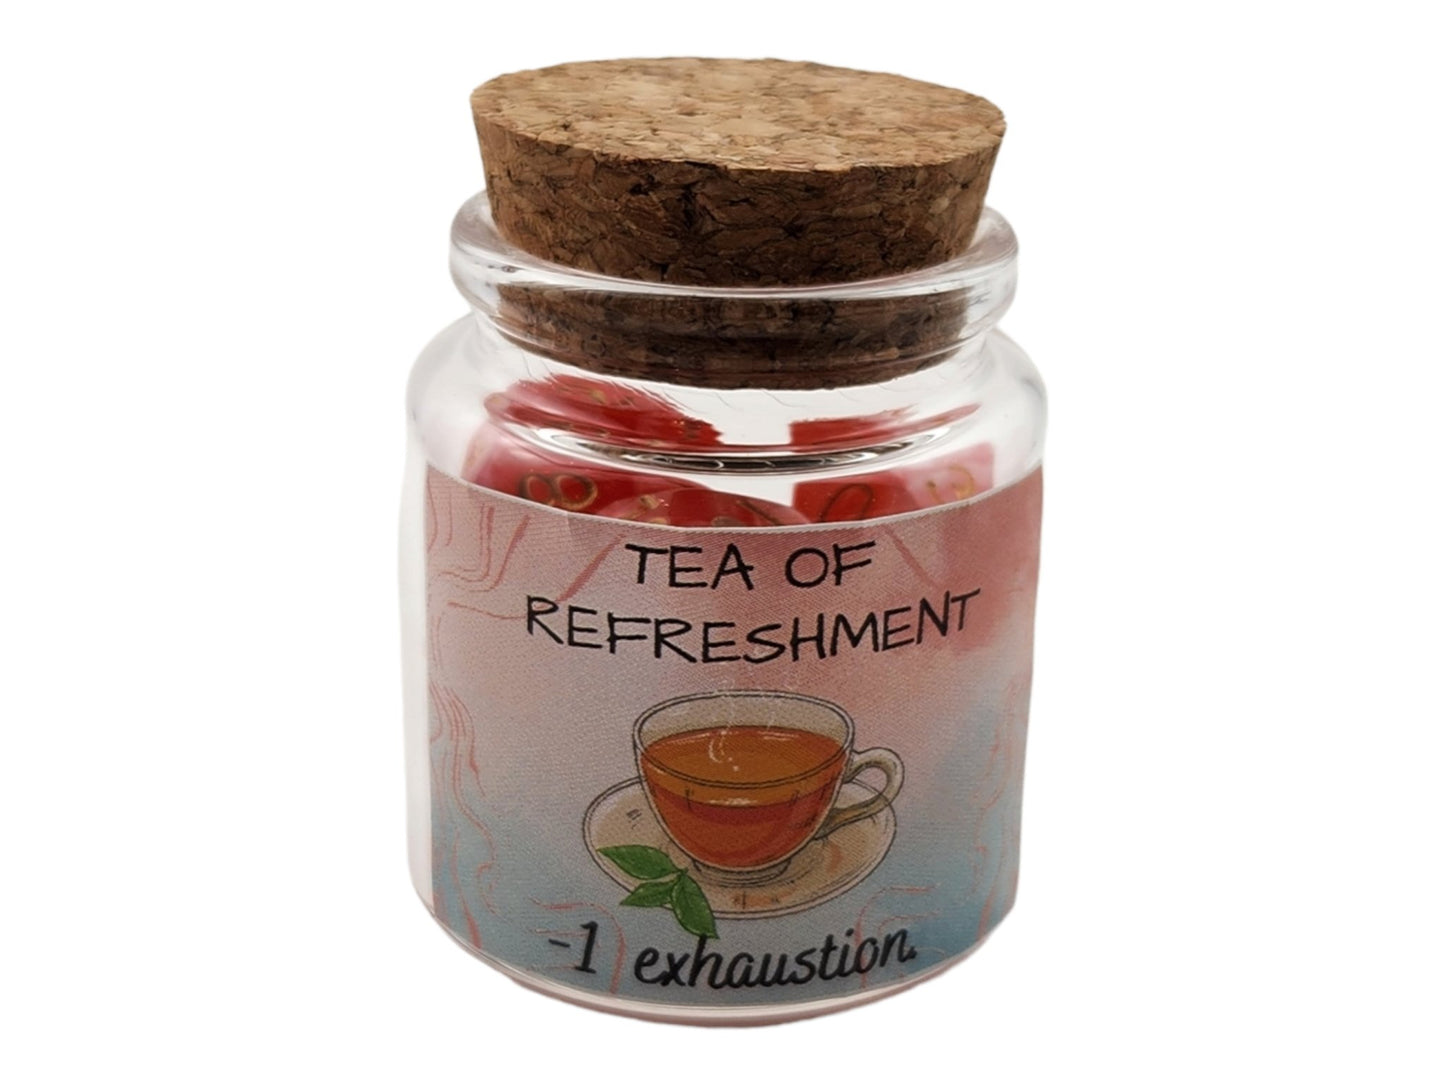 Tea of Refreshment dice jar potion - Rowan Gate